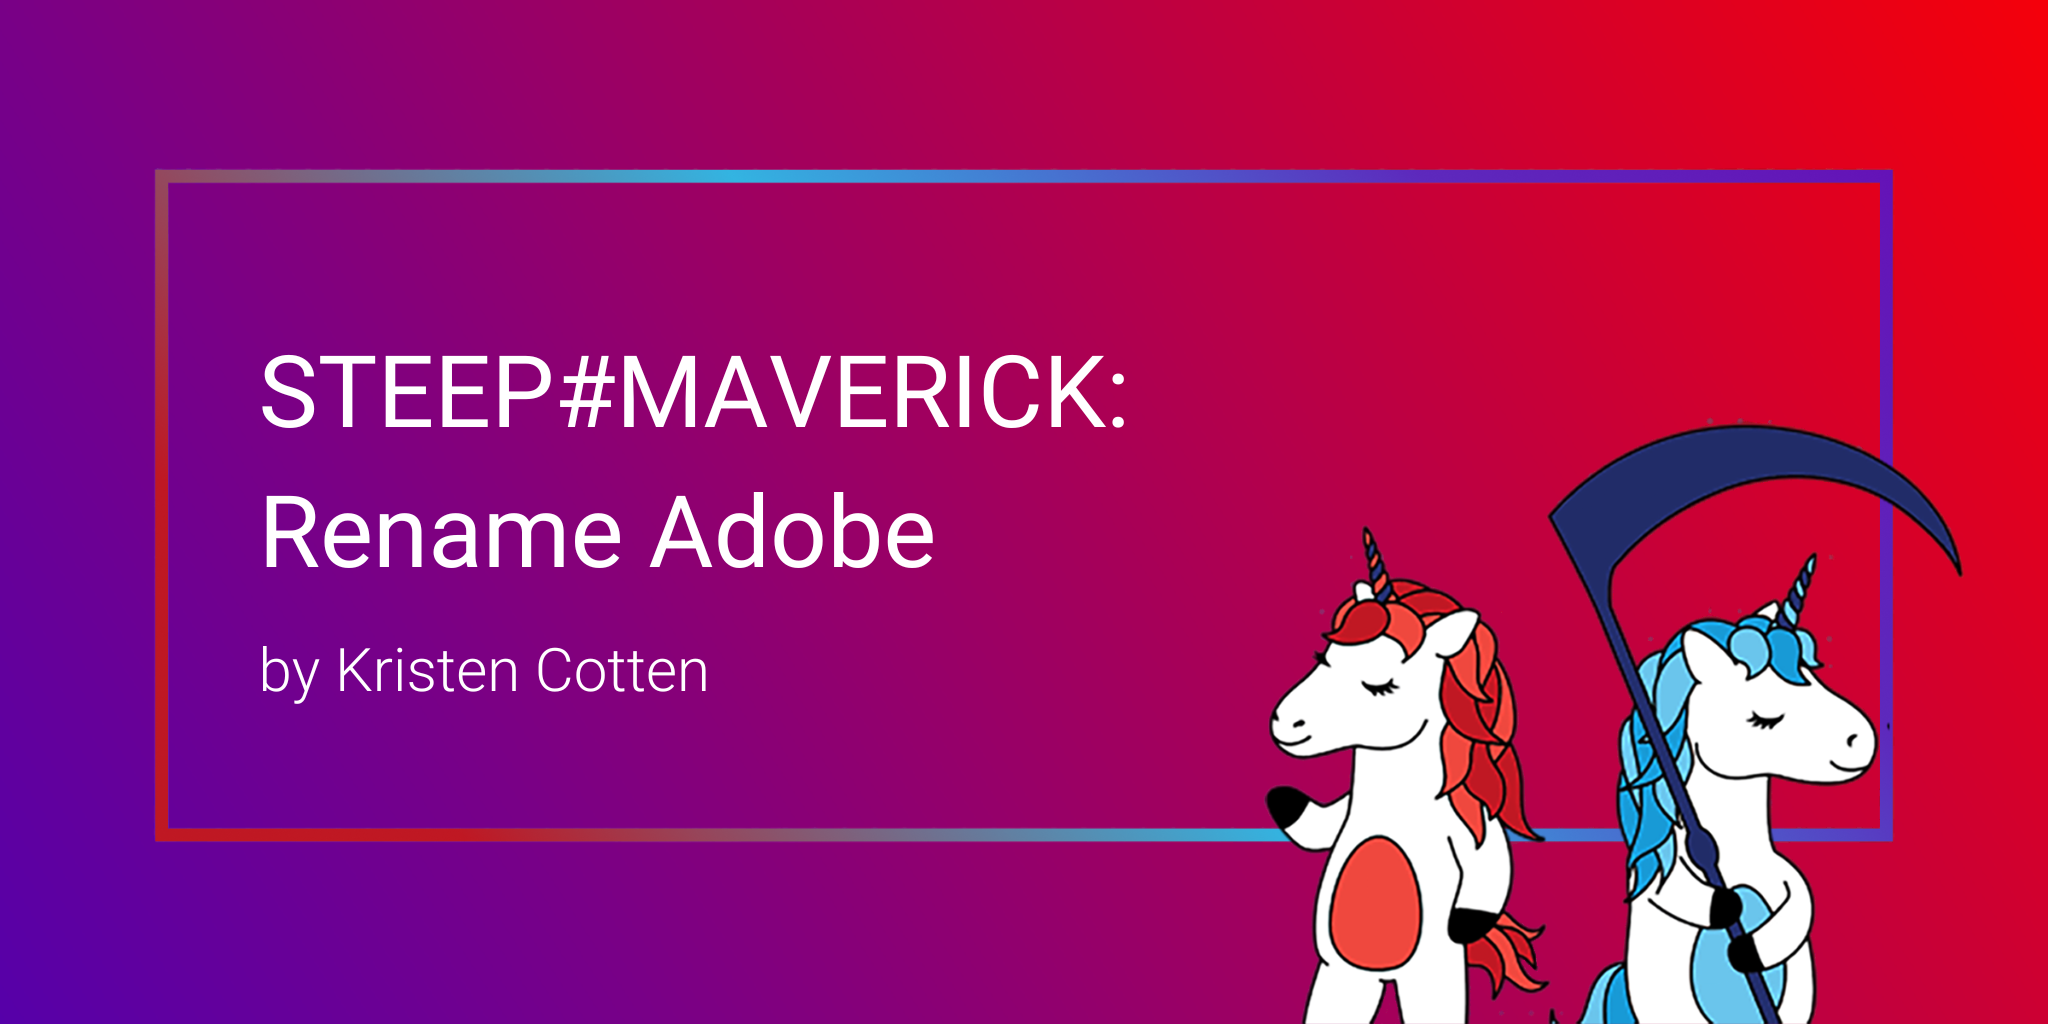 STEEP#MAVERICK: Rename Adobe